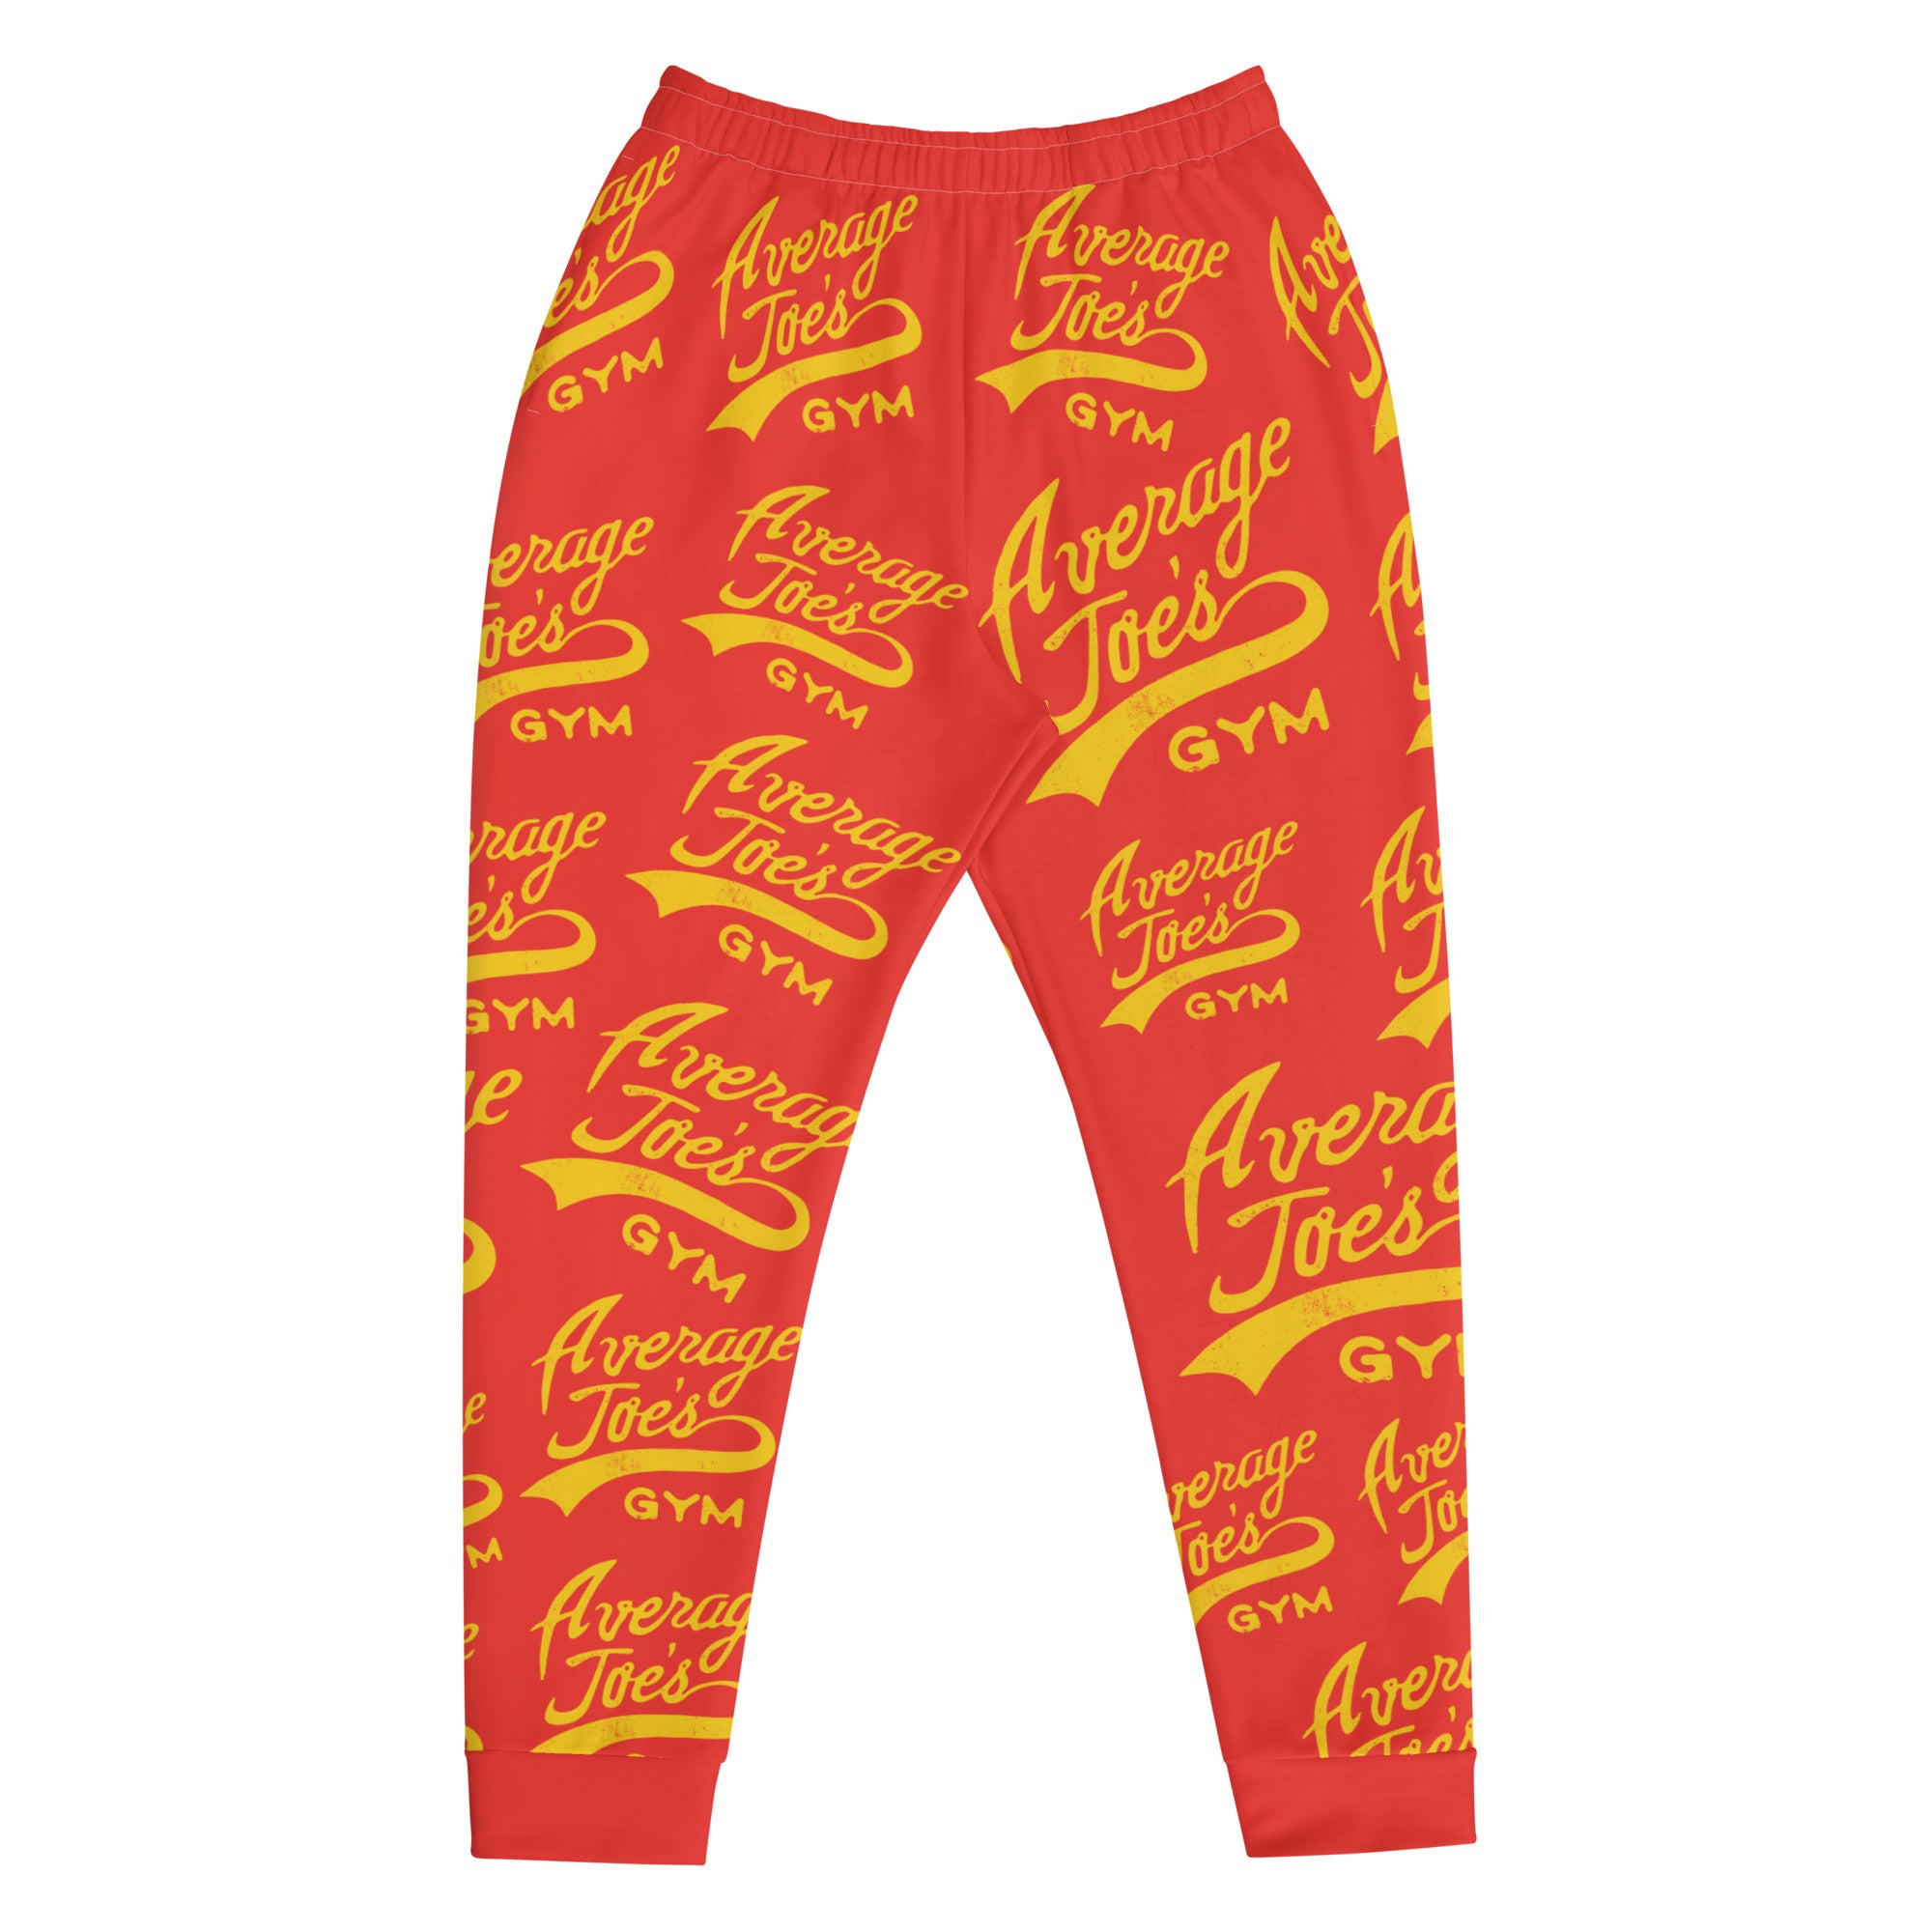 Average Joe's Gym - Pajama Lounge Pants